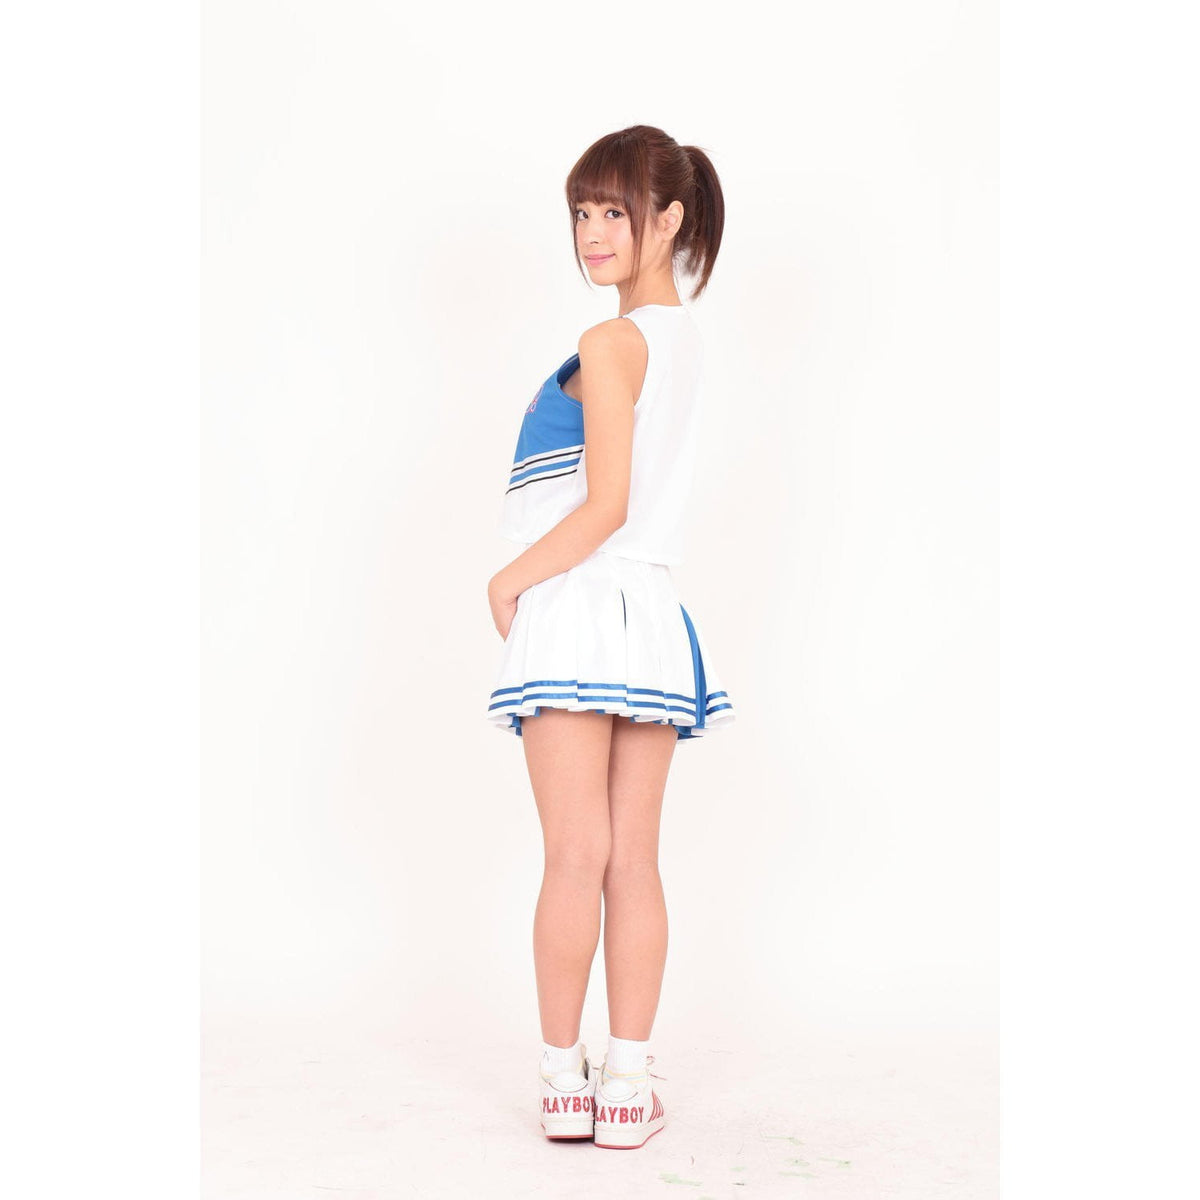 A&amp;T - Blue Planet Cheerleader Costume (Multi Colour) AT1014 CherryAffairs